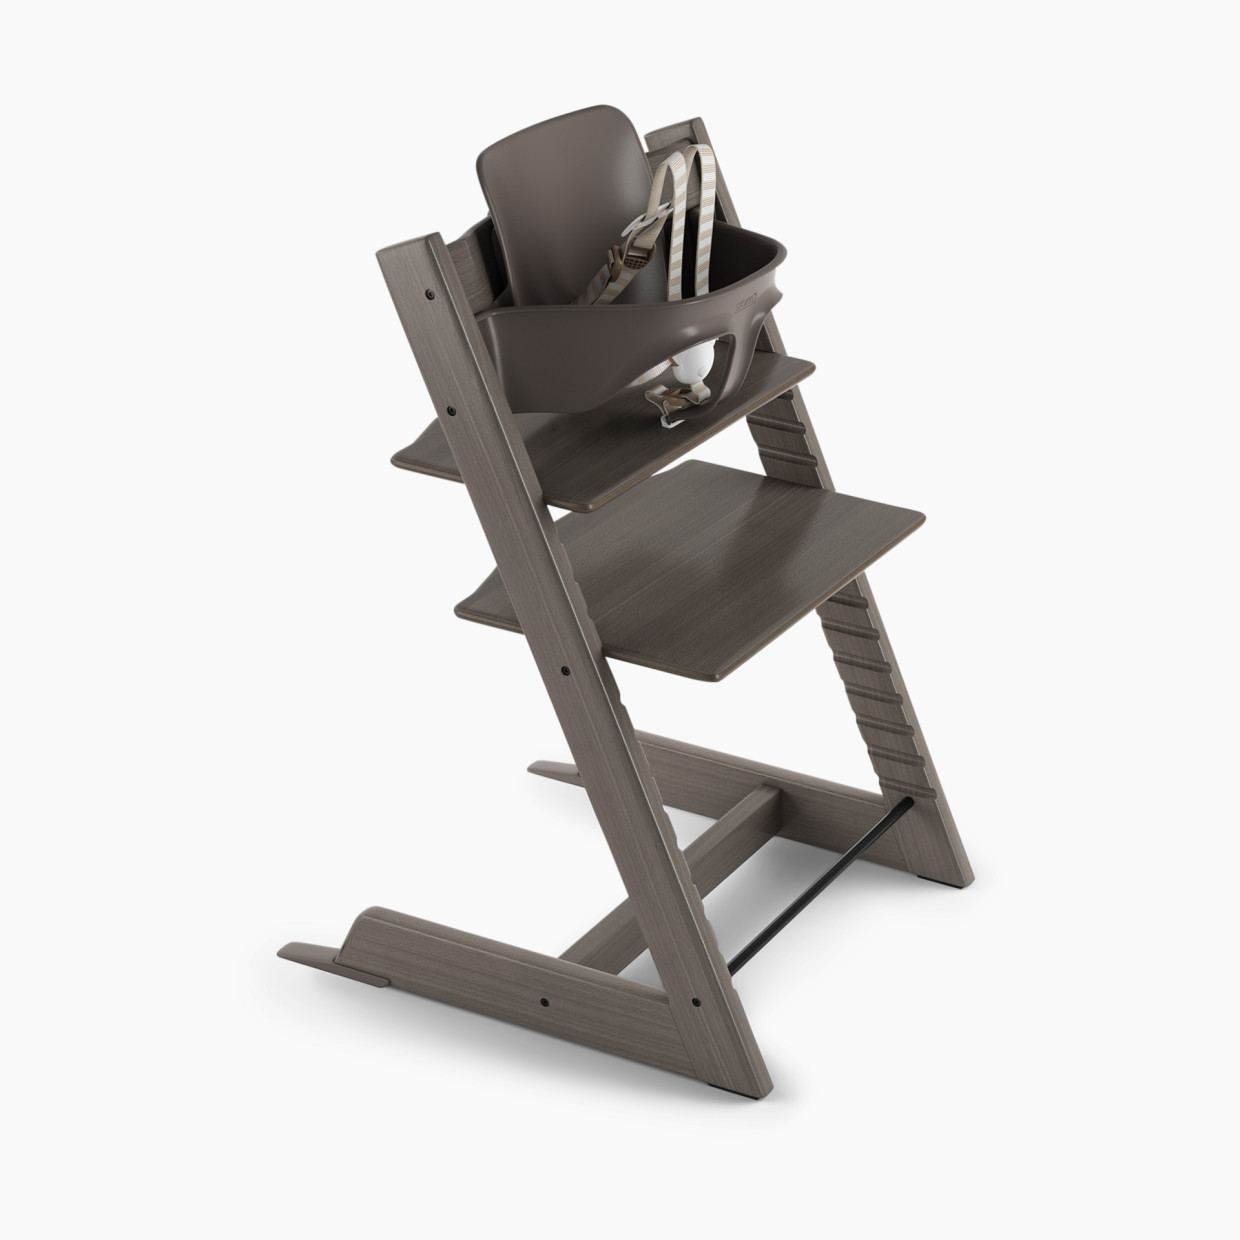 Stokke Tripp Trapp High Chair - Hazy Grey.